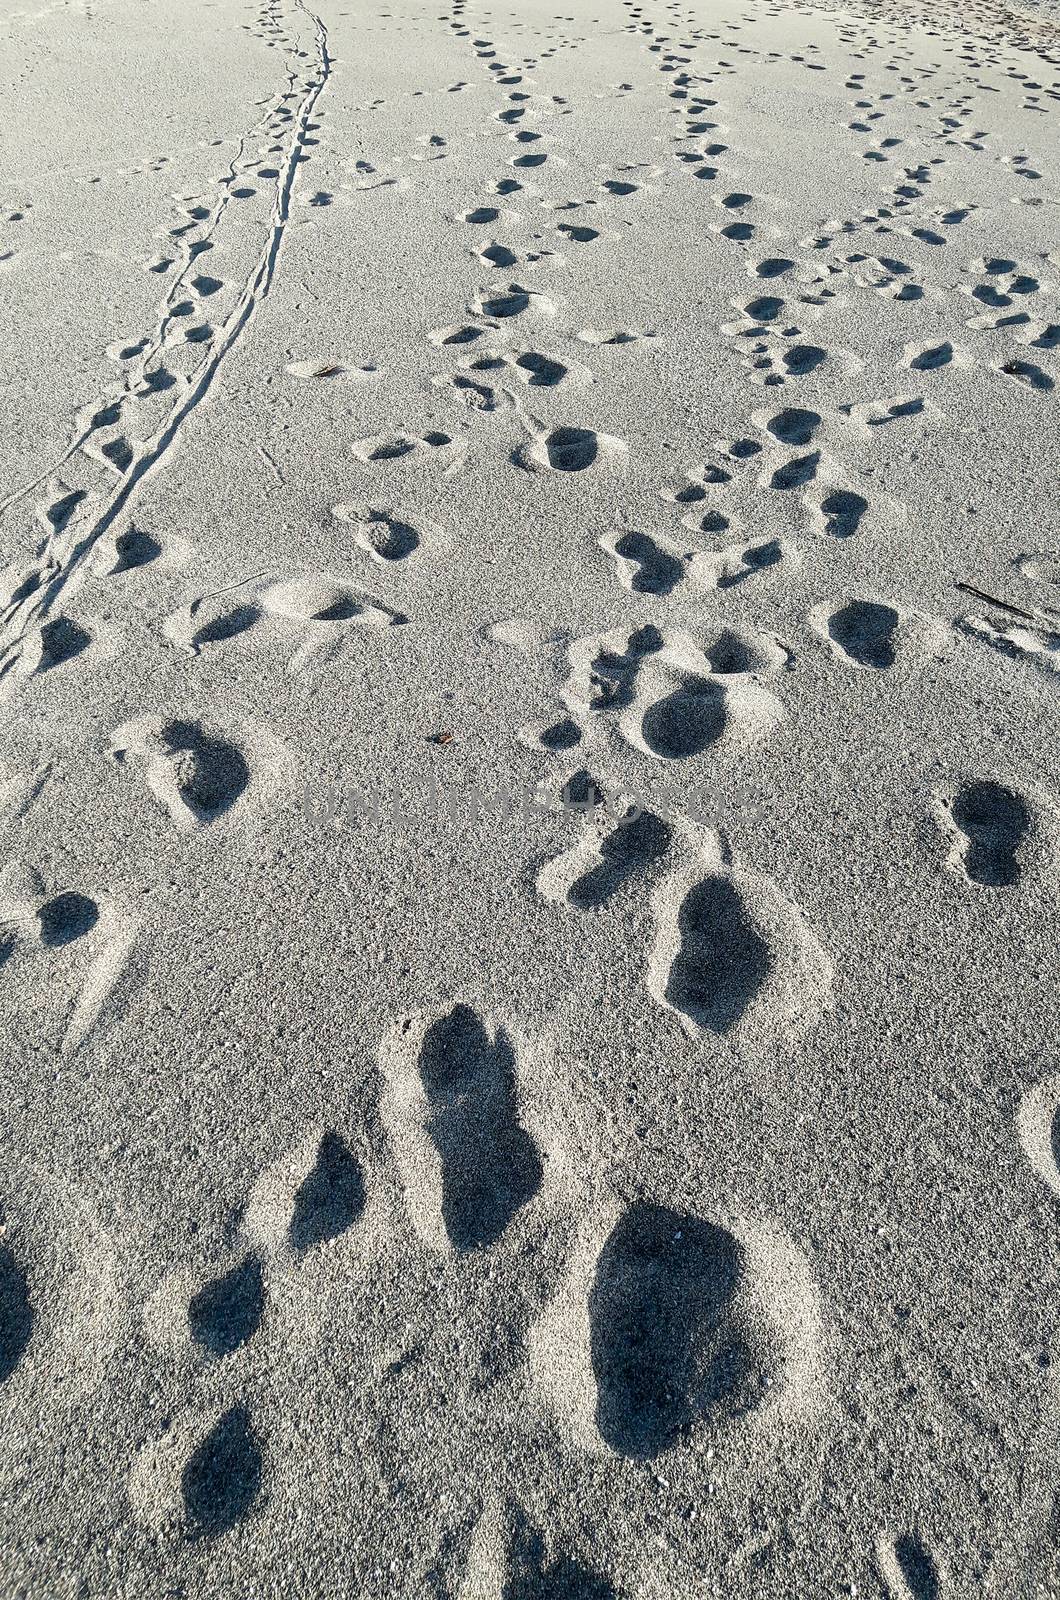 Many footsteps on a sandy beach by marcorubino